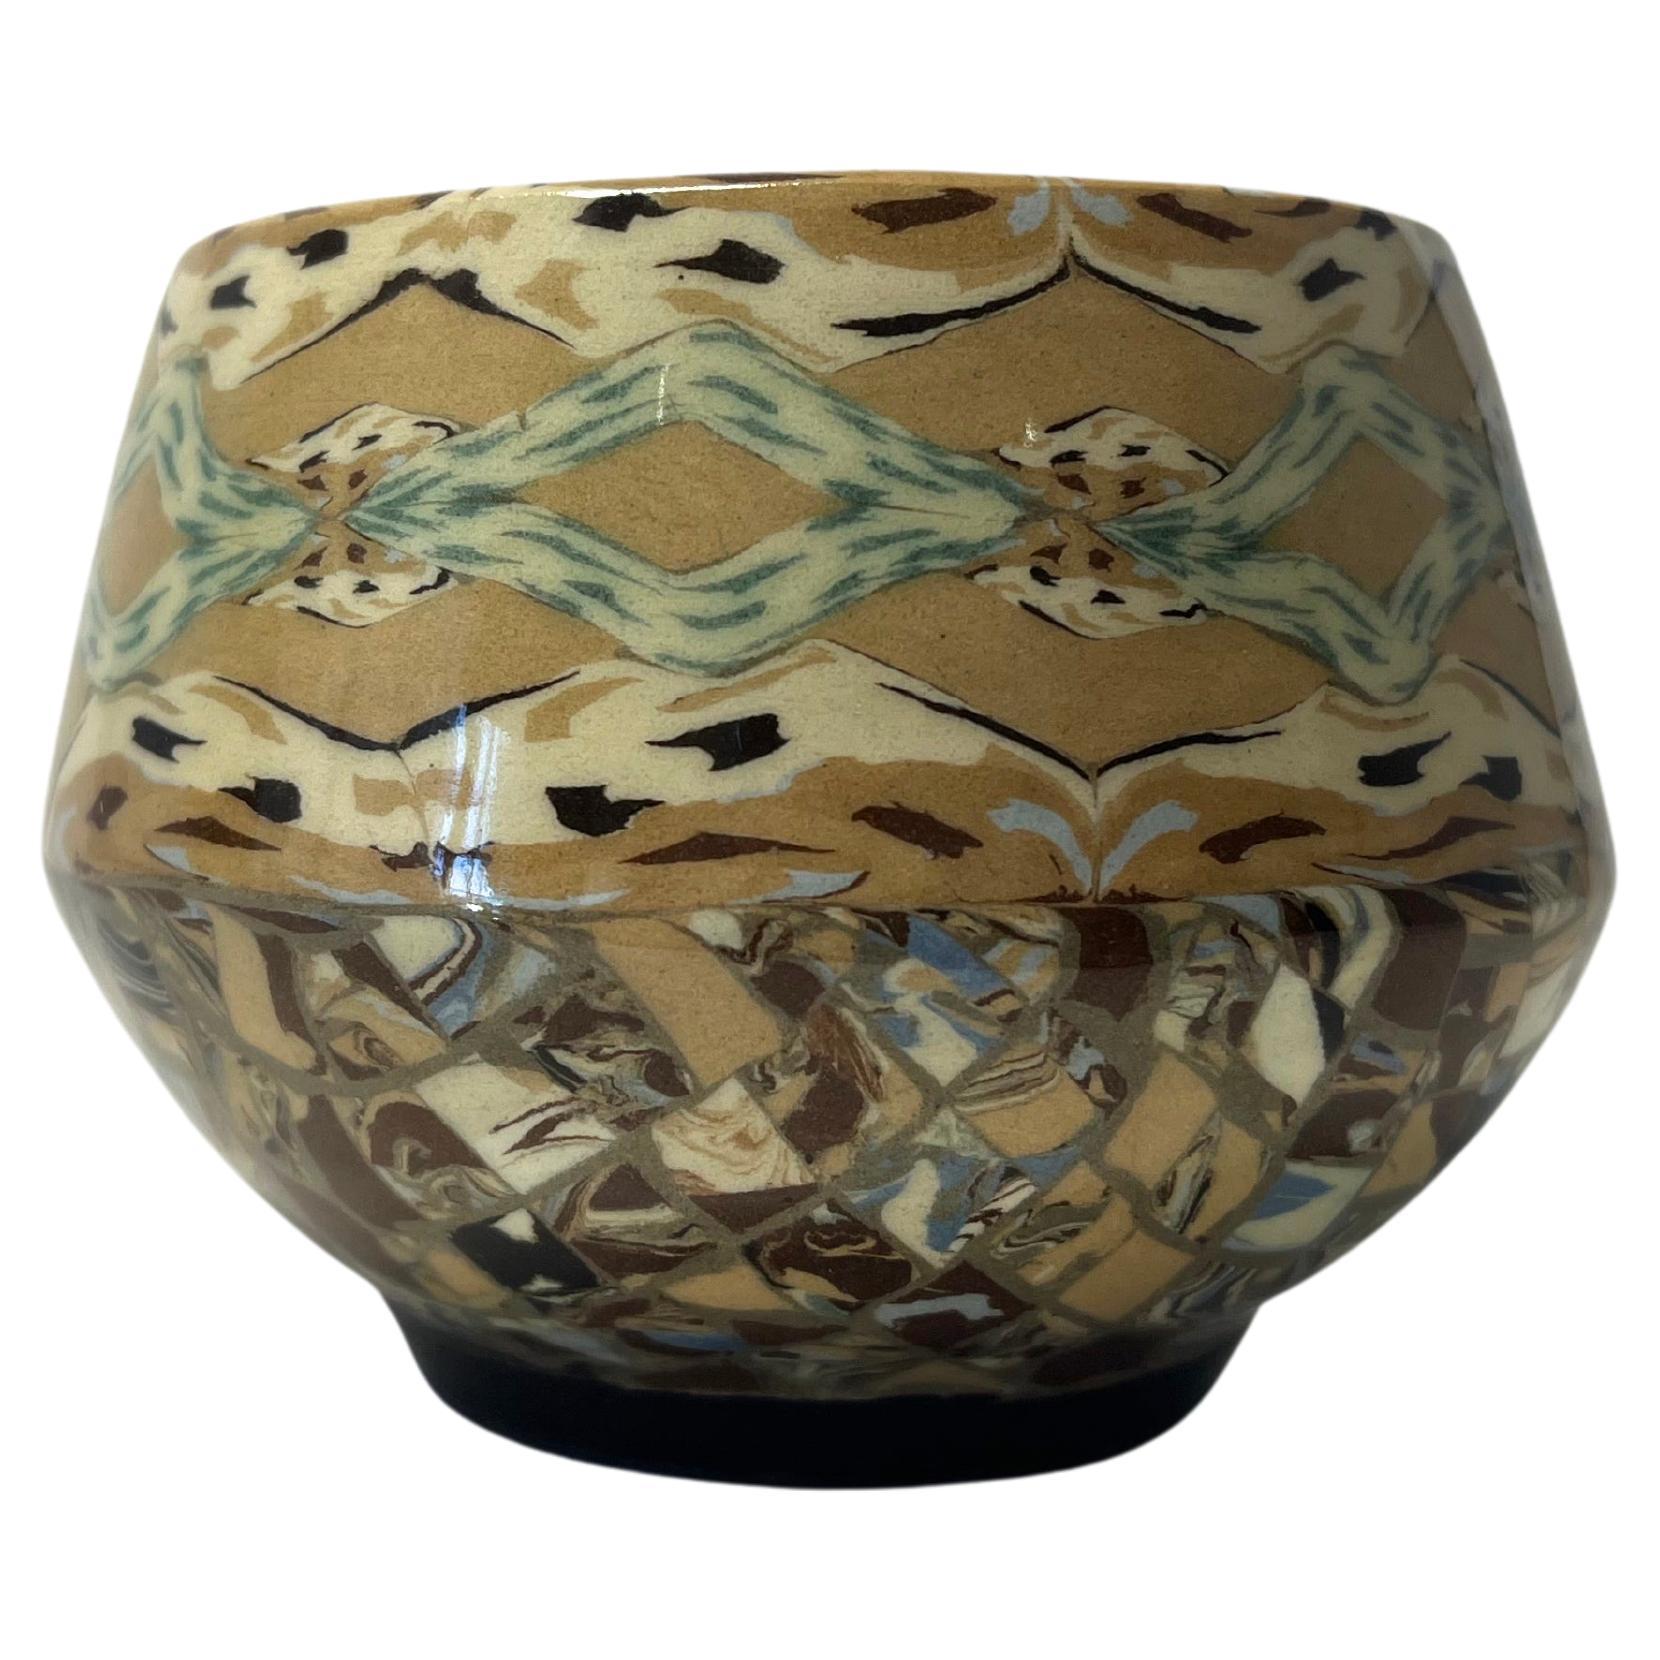 Petit Jean Gerbino For Vallauris, France, Ceramic Glazed Earth Tones Mosaic Pot For Sale